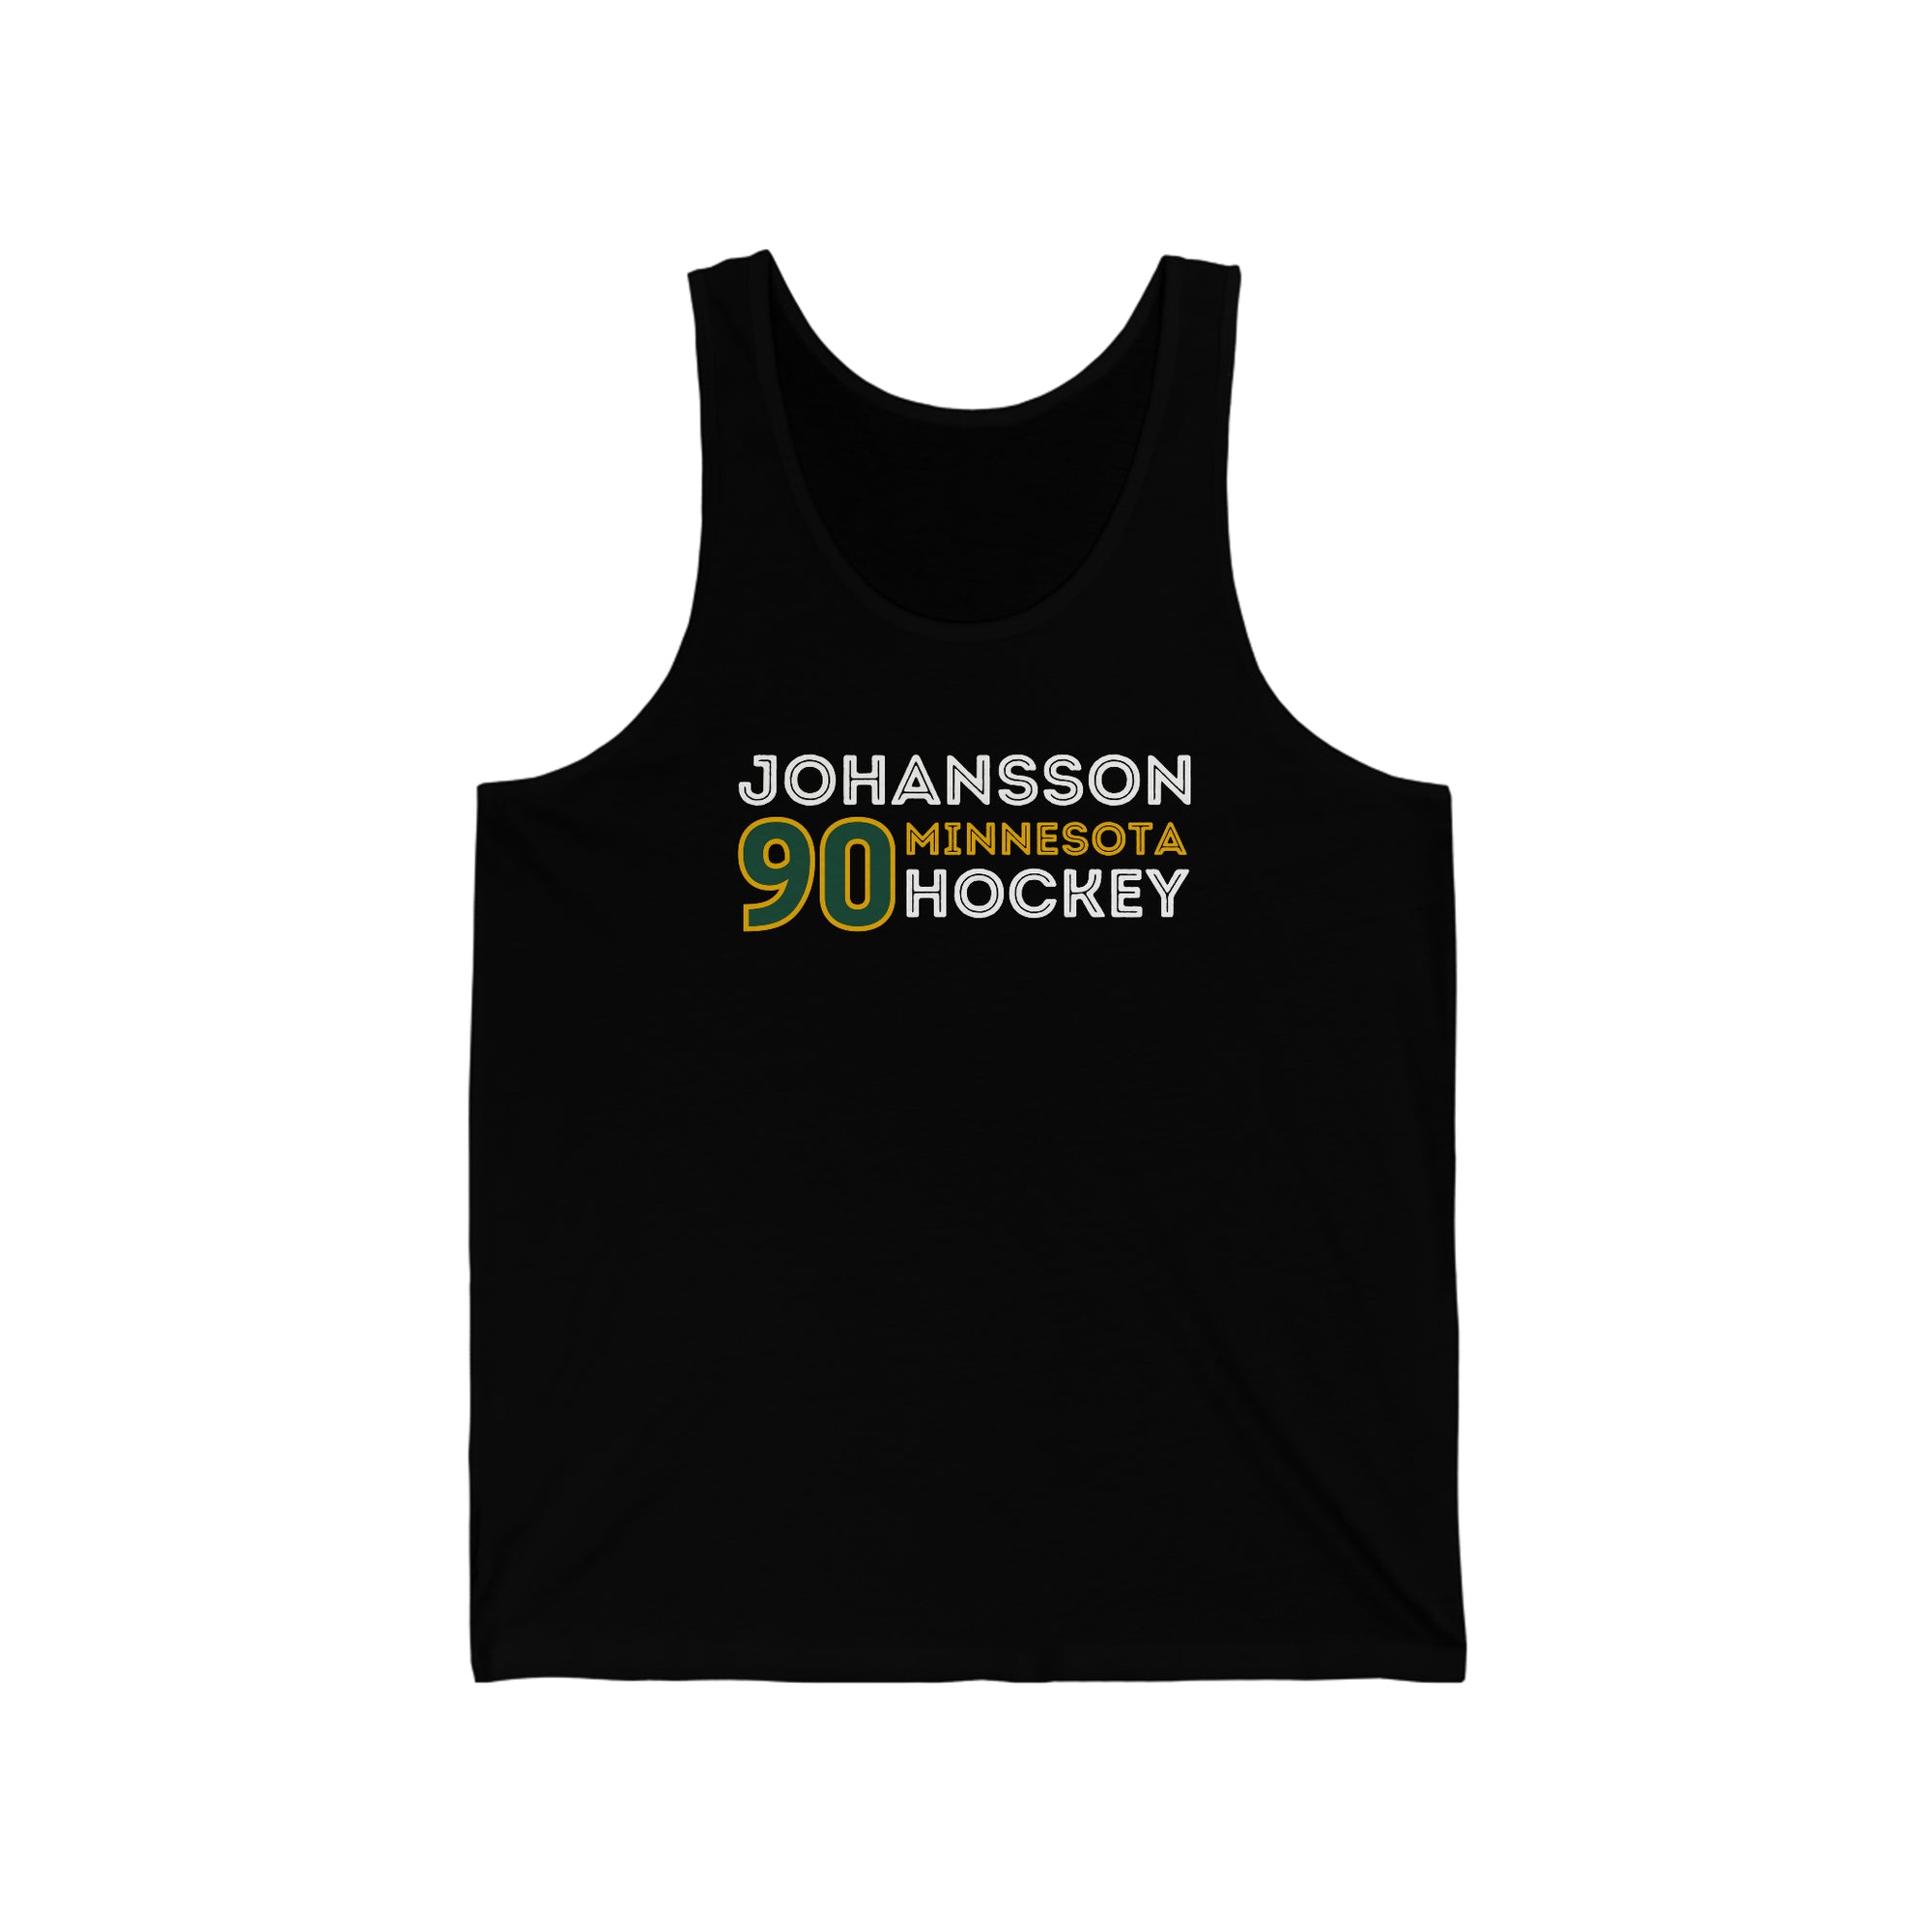 Johansson 90 Minnesota Hockey Grafitti Wall Design Unisex Jersey Tank Top